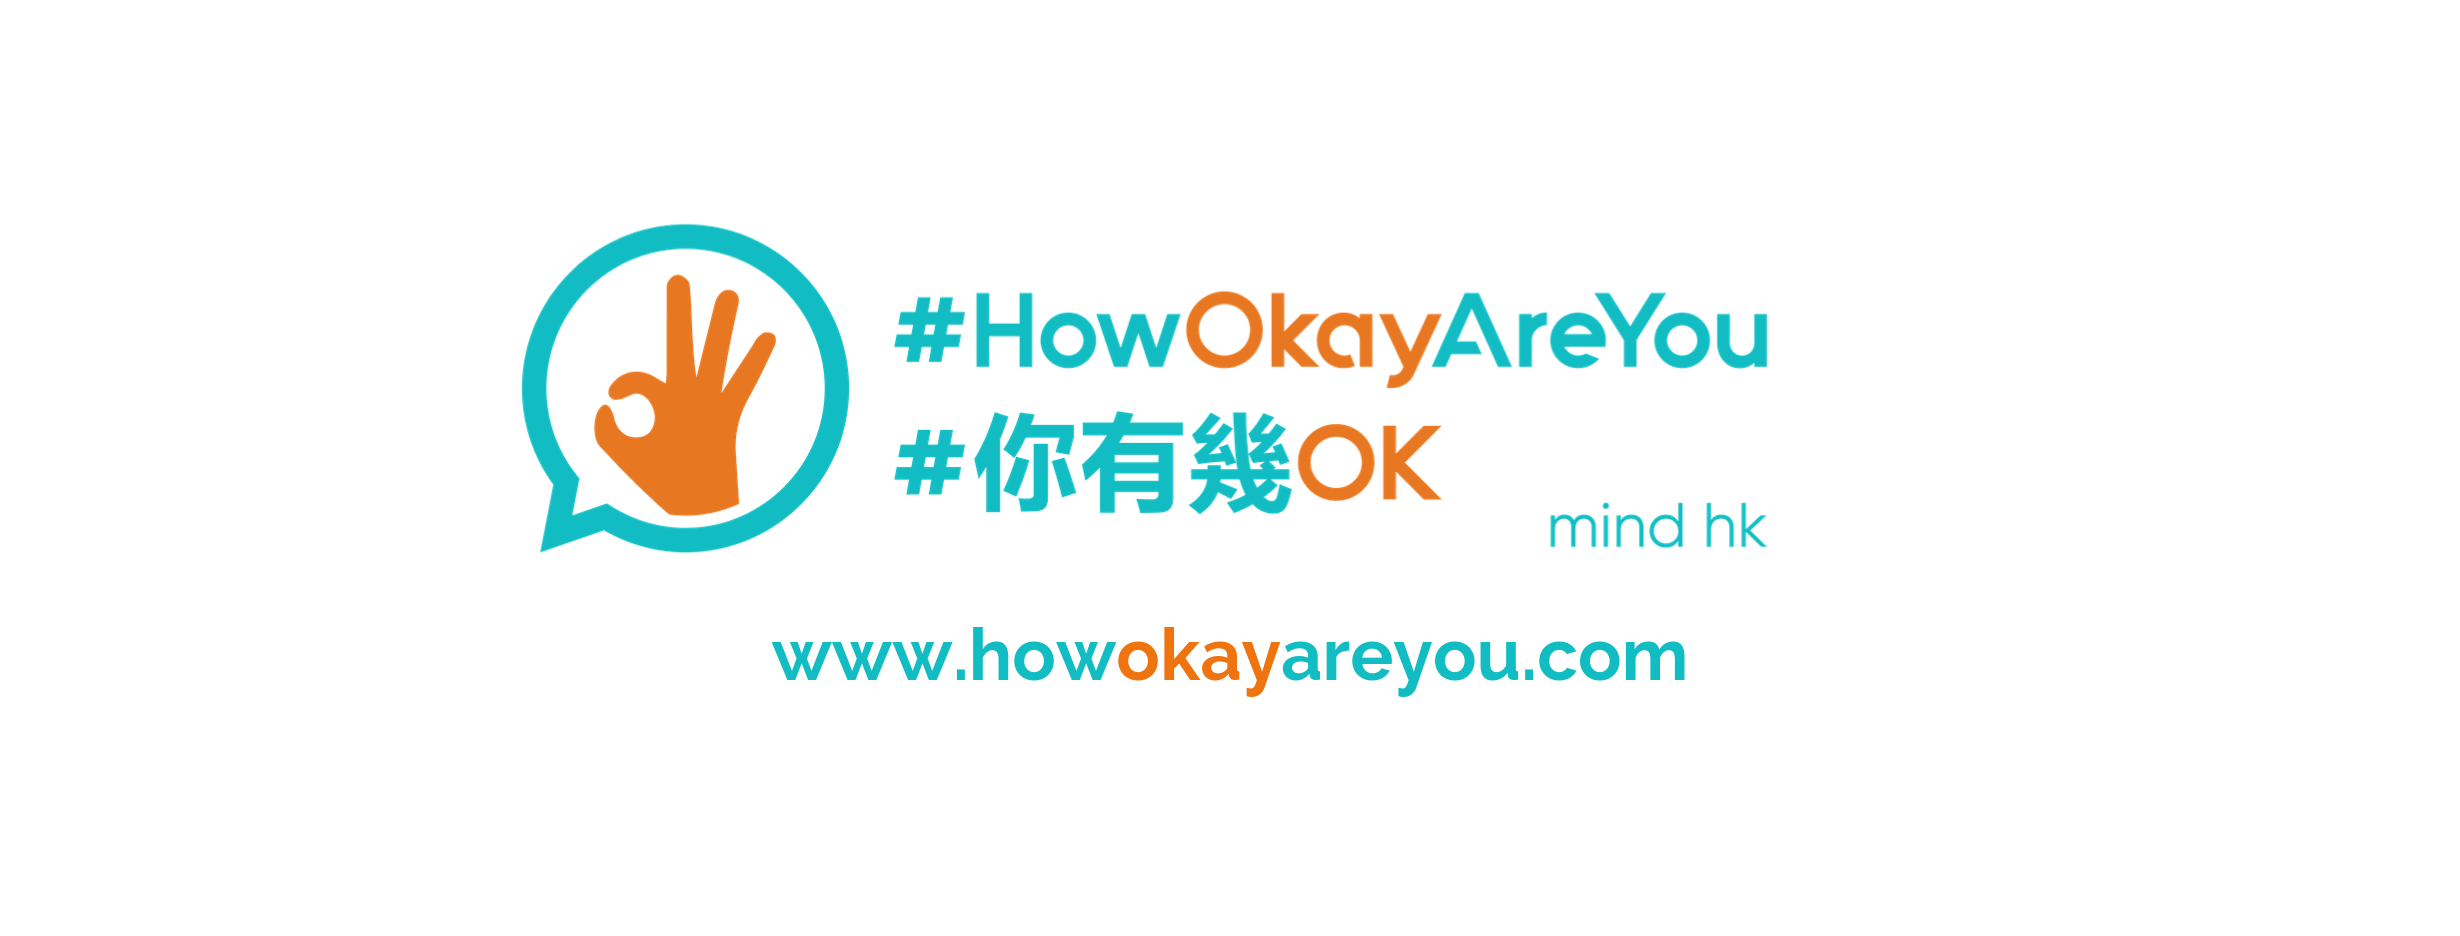 Press Release World Mental Health Day Howokayareyoucampaign